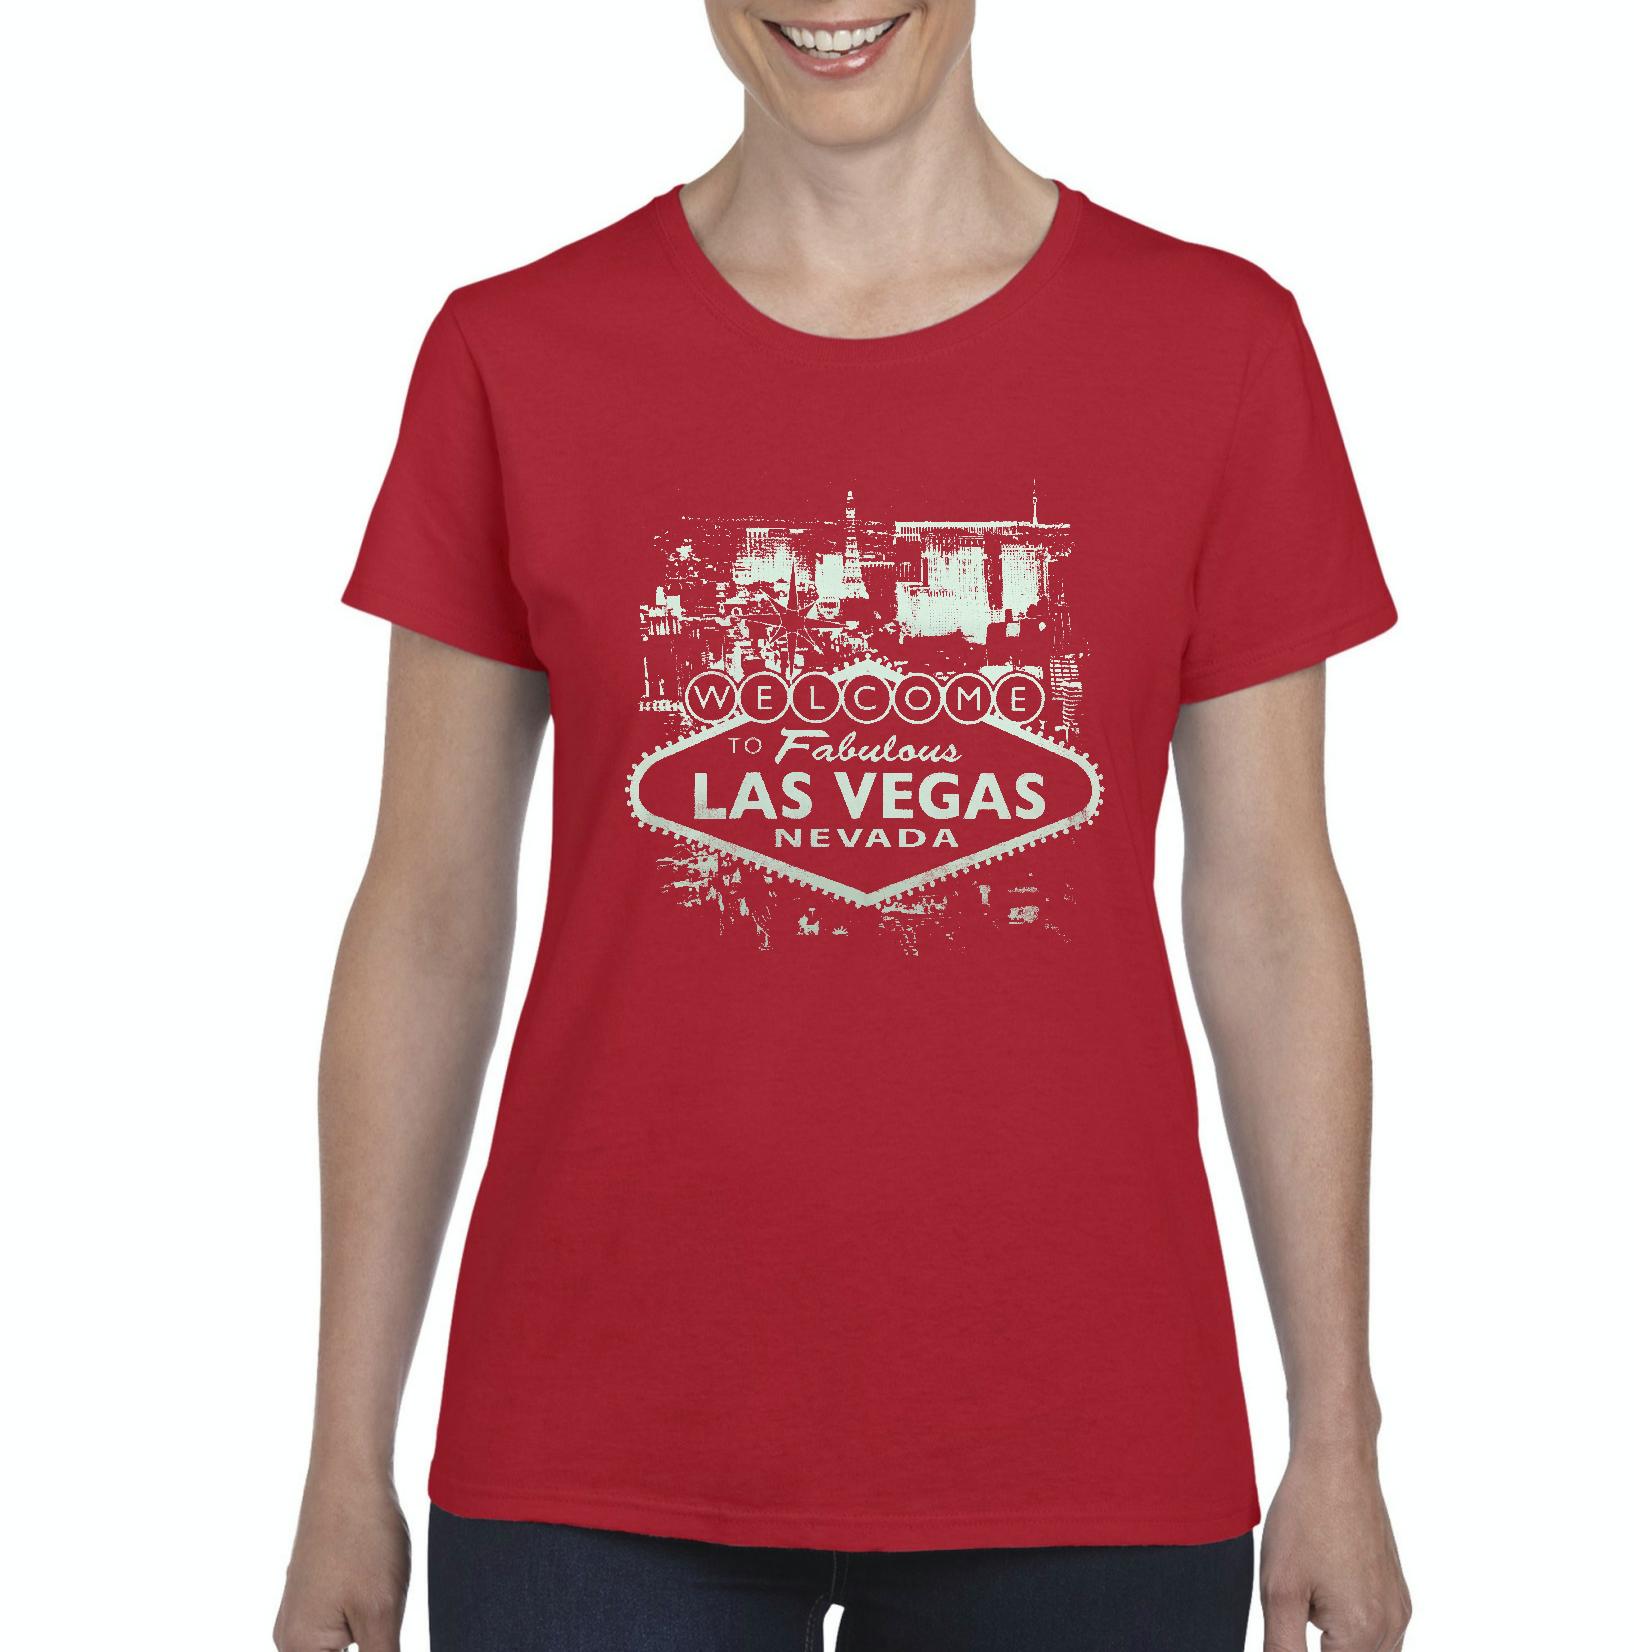 NIB - Women's T-Shirt Short Sleeve - Welcome to Las Vegas Nevada - image 1 of 5